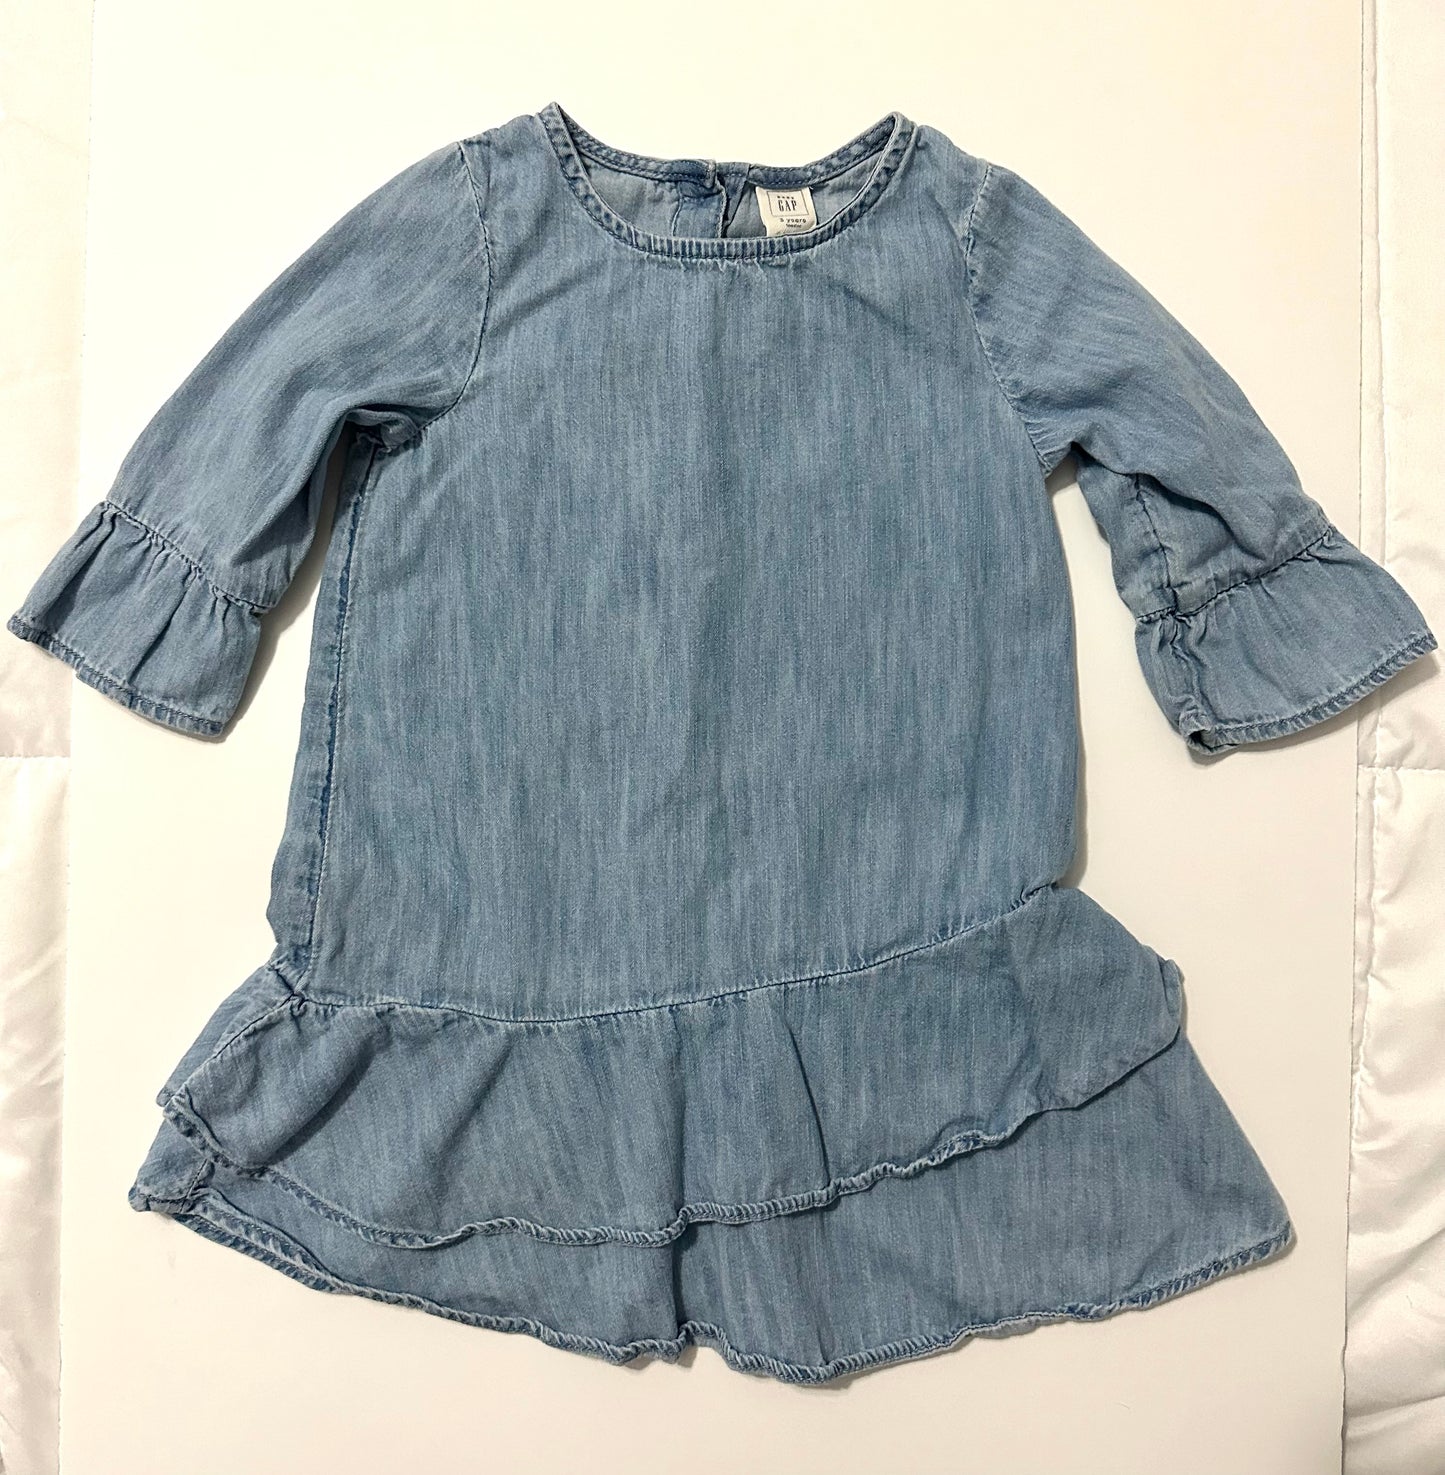 Gap toddler dress size 3T